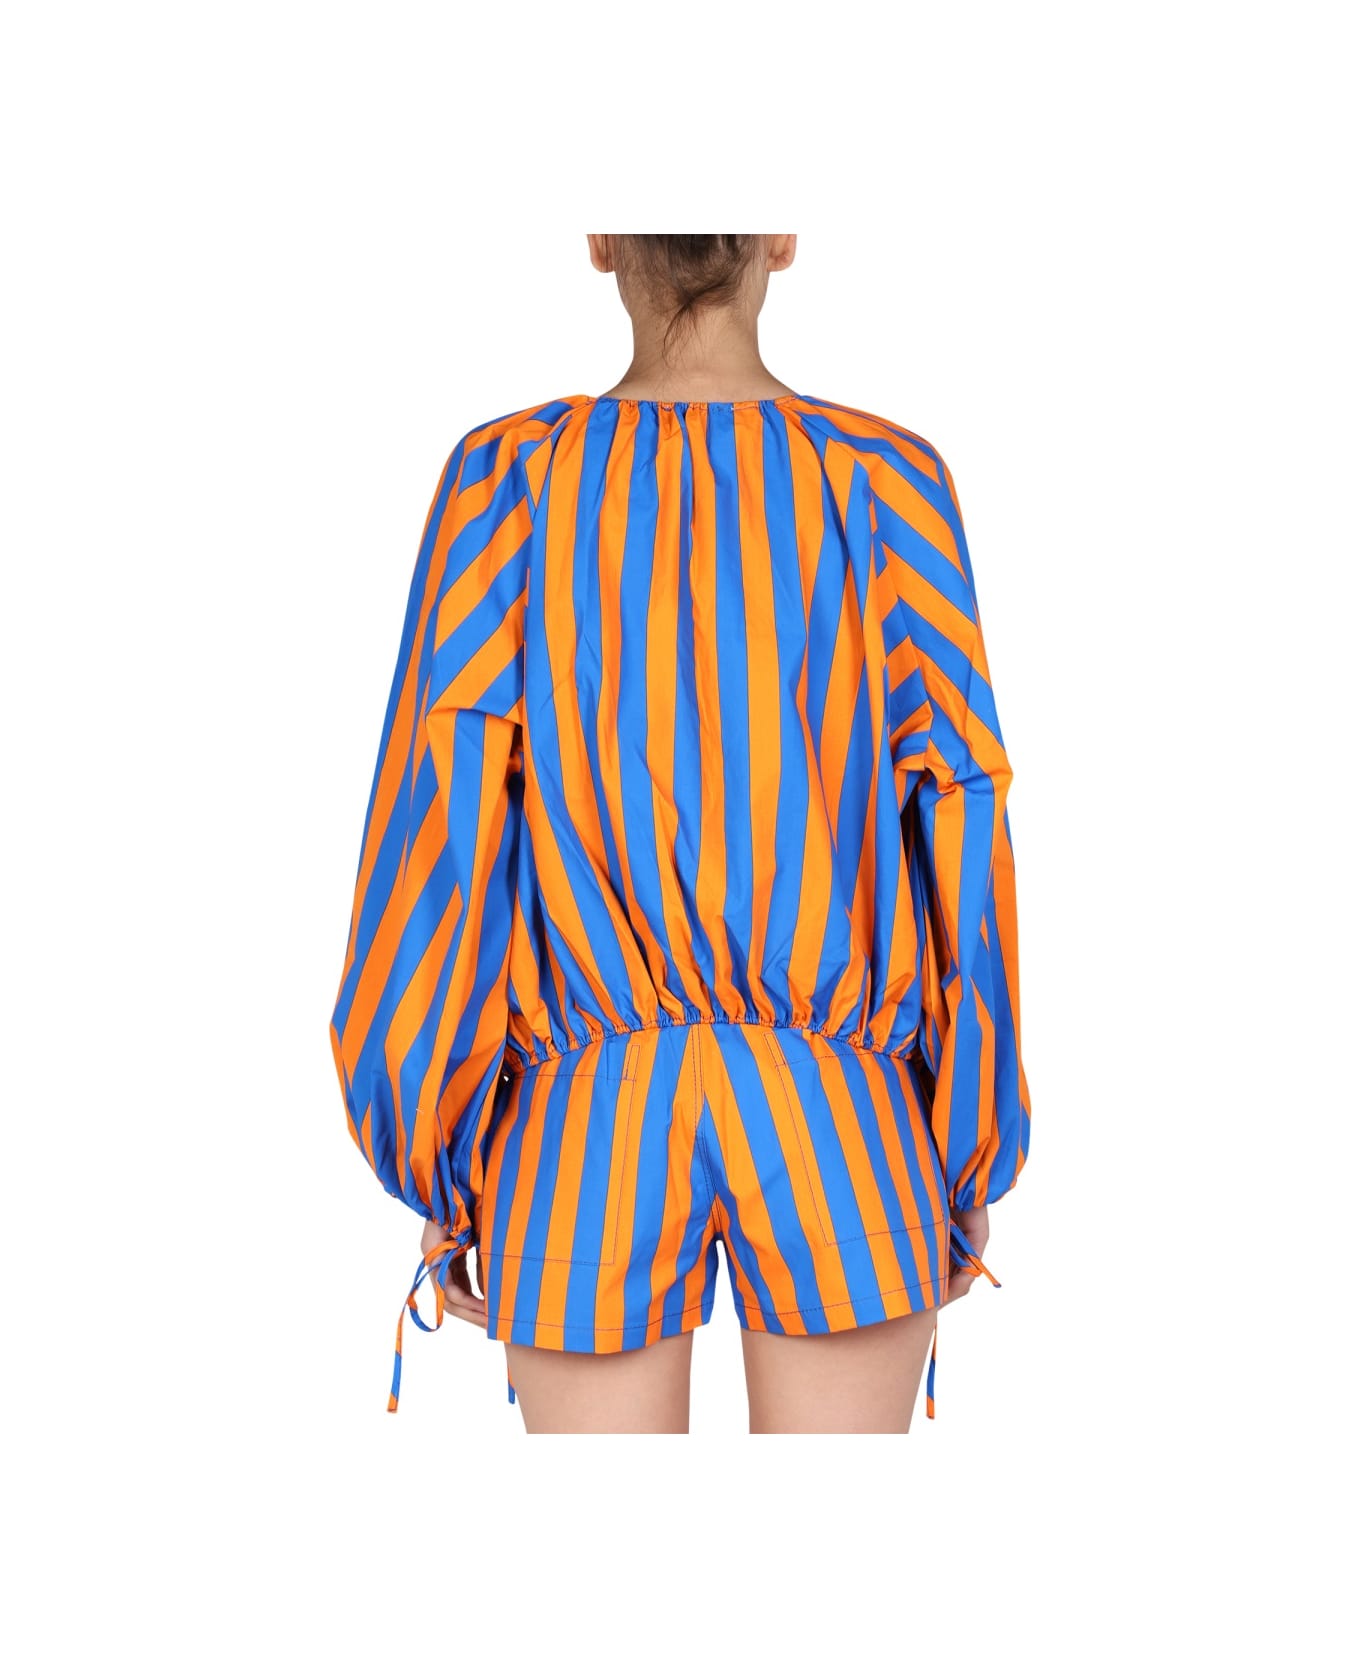 Sunnei Striped Pattern Shirt - MULTICOLOUR